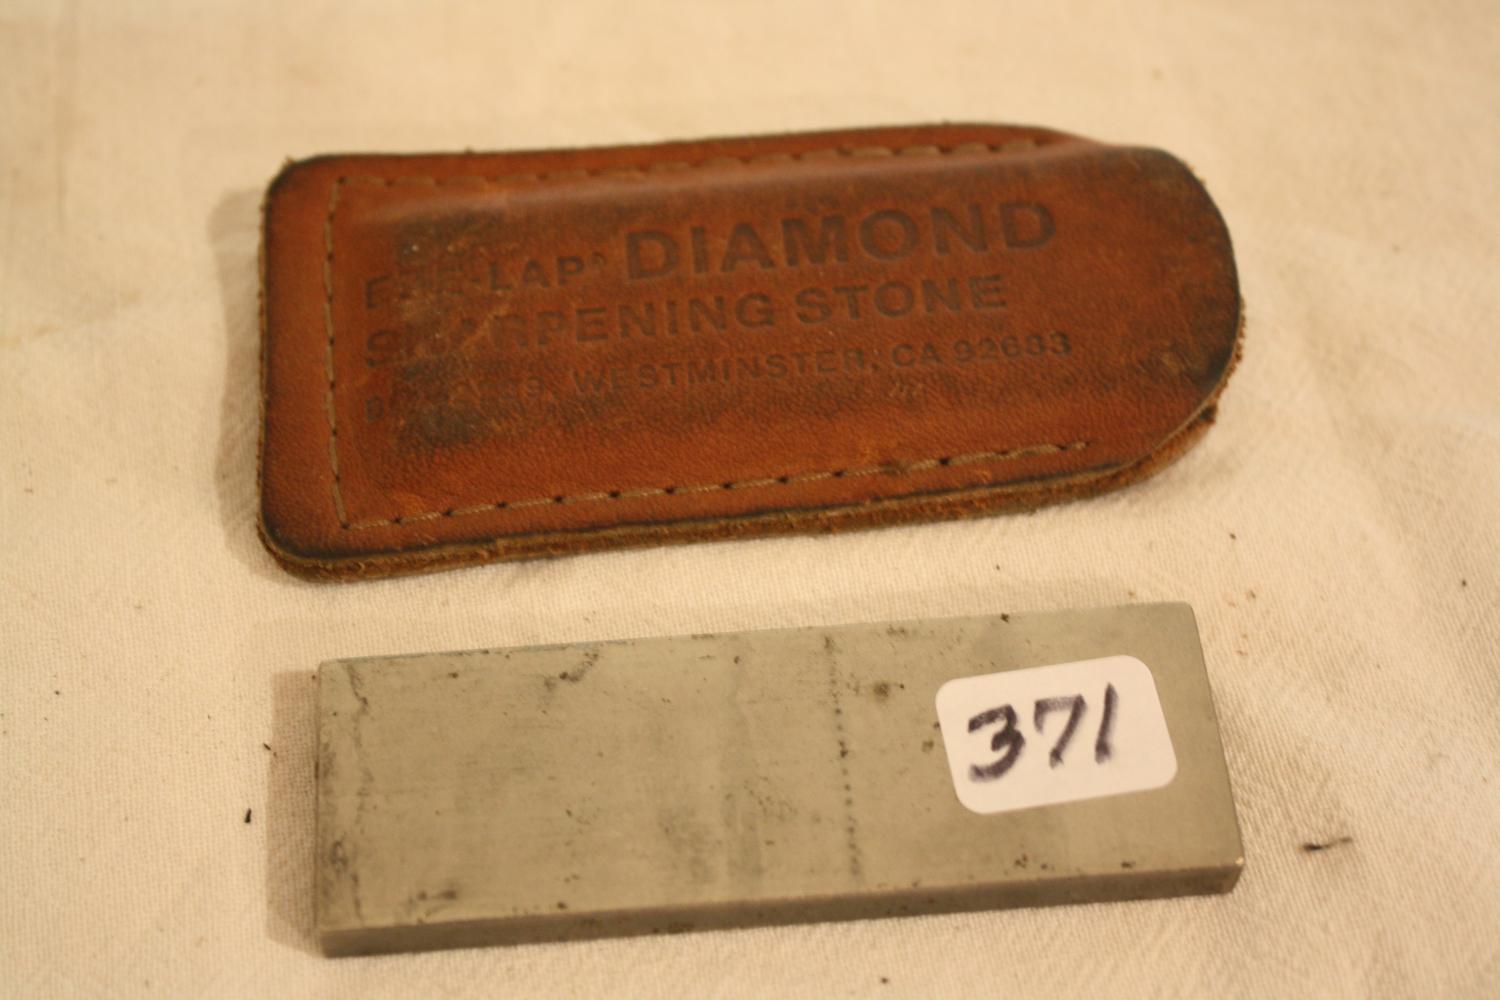 Diamond Sharpening Steel in Leather